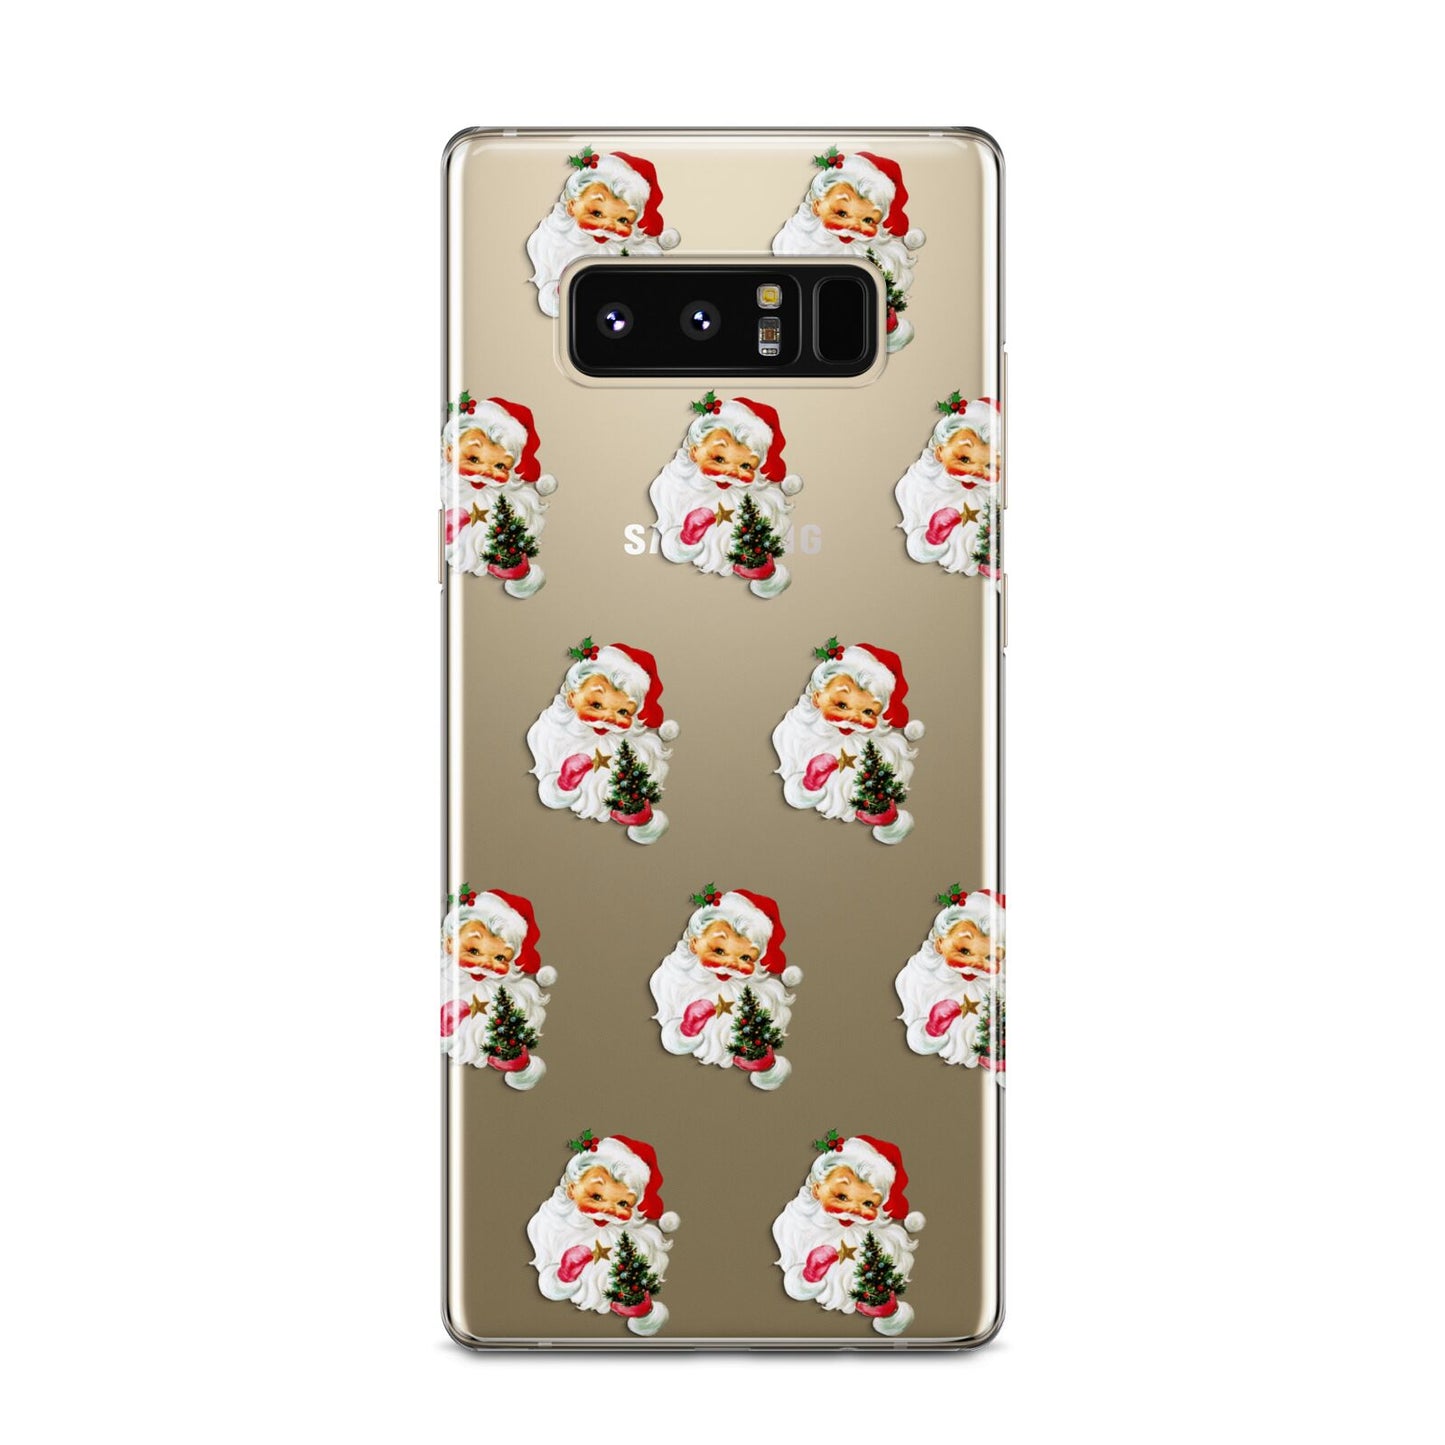 Retro Santa Face Samsung Galaxy Note 8 Case